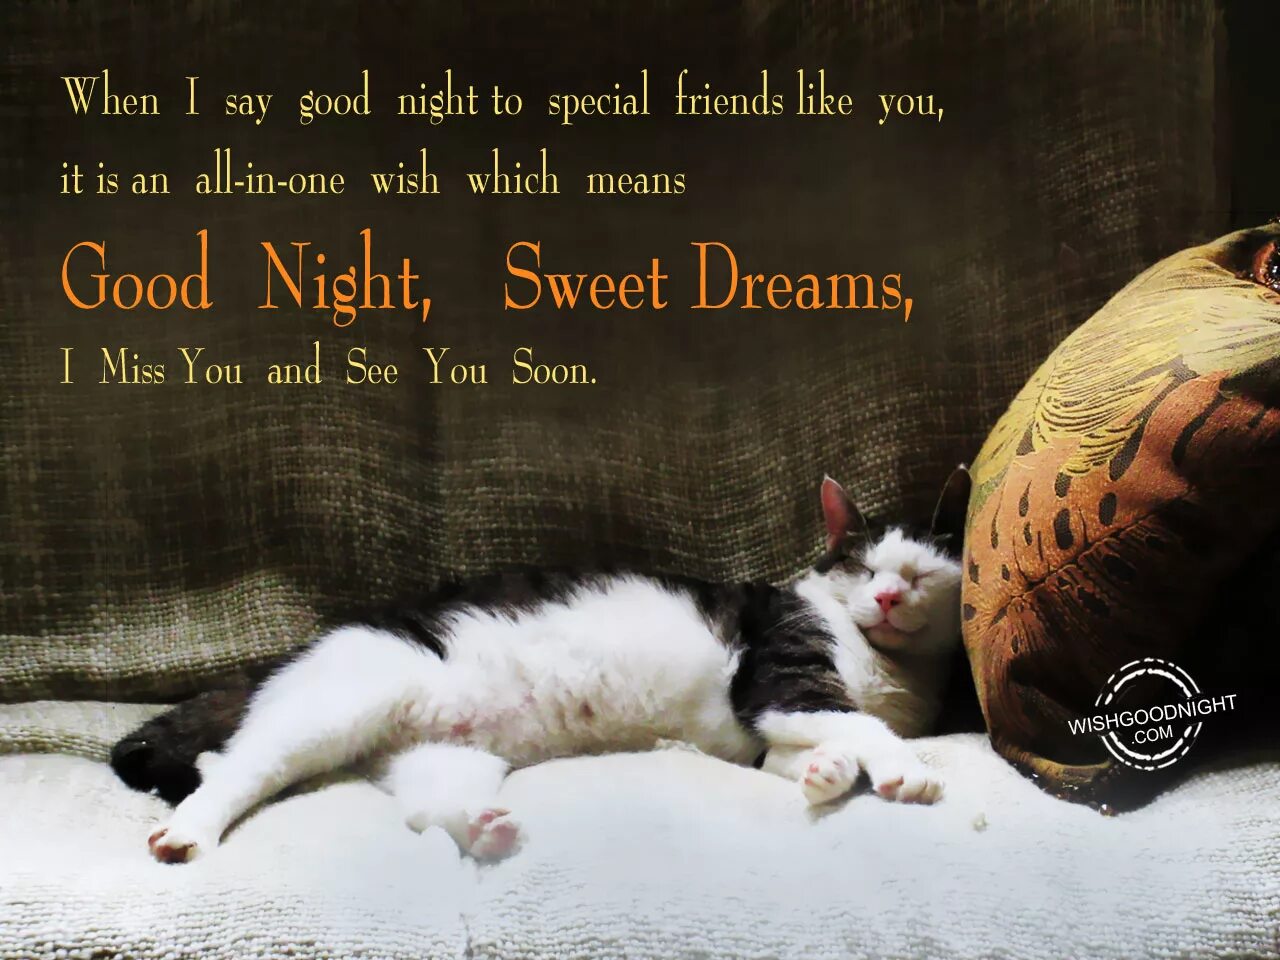 Good Night i Miss you. Good Night картинки. Good Night Wishes. Good Night Wishes for friends.